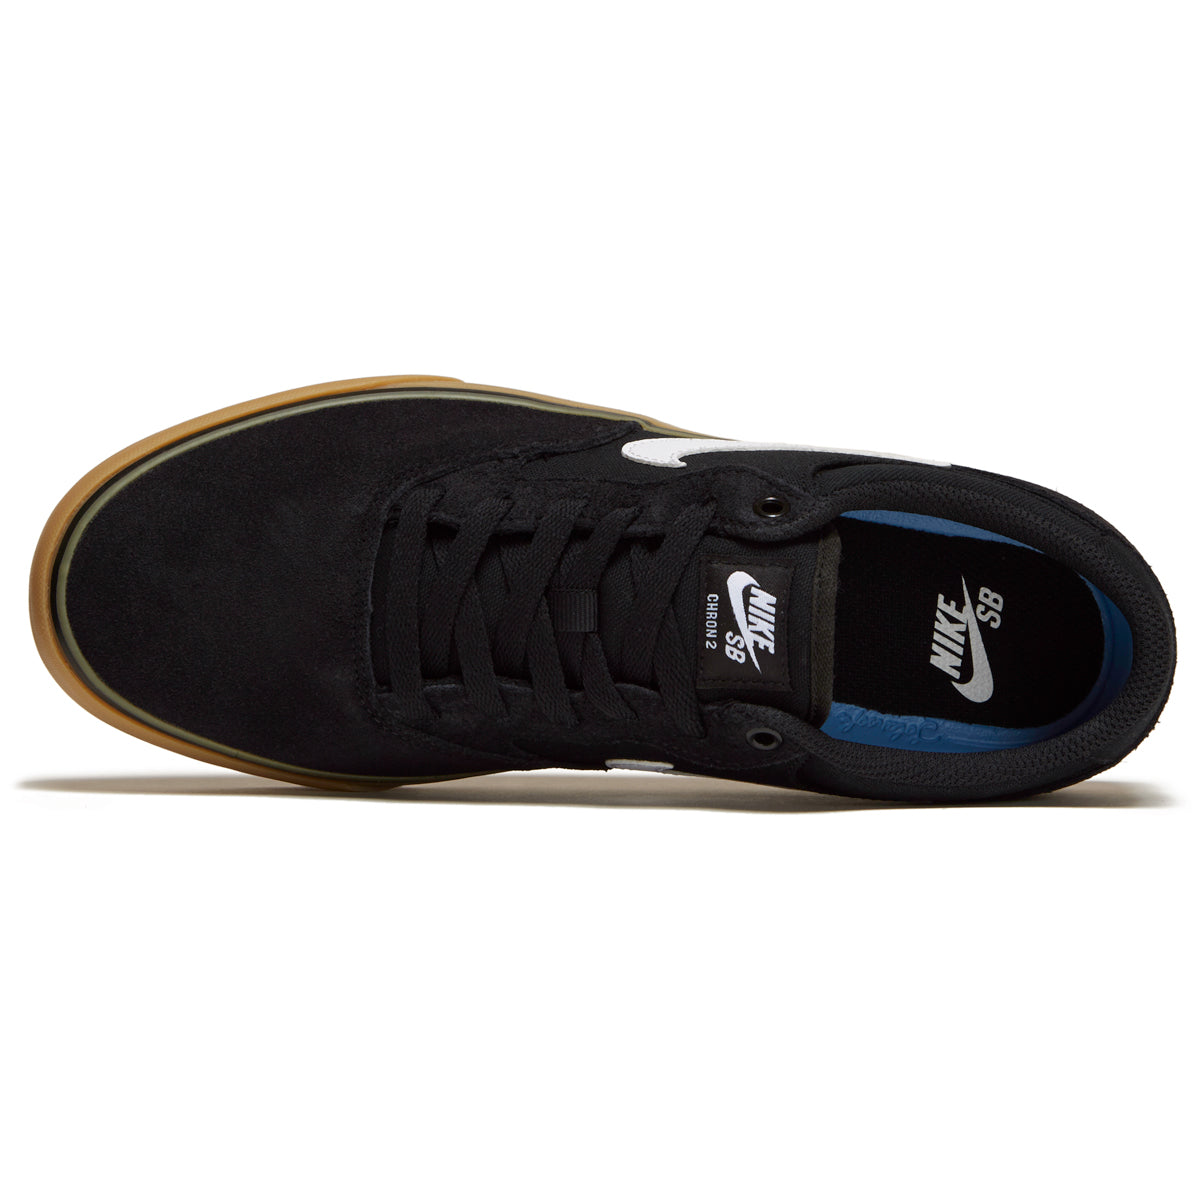 Nike SB Chron 2 Shoes - Black/White/Black/Gum Light Brown image 3